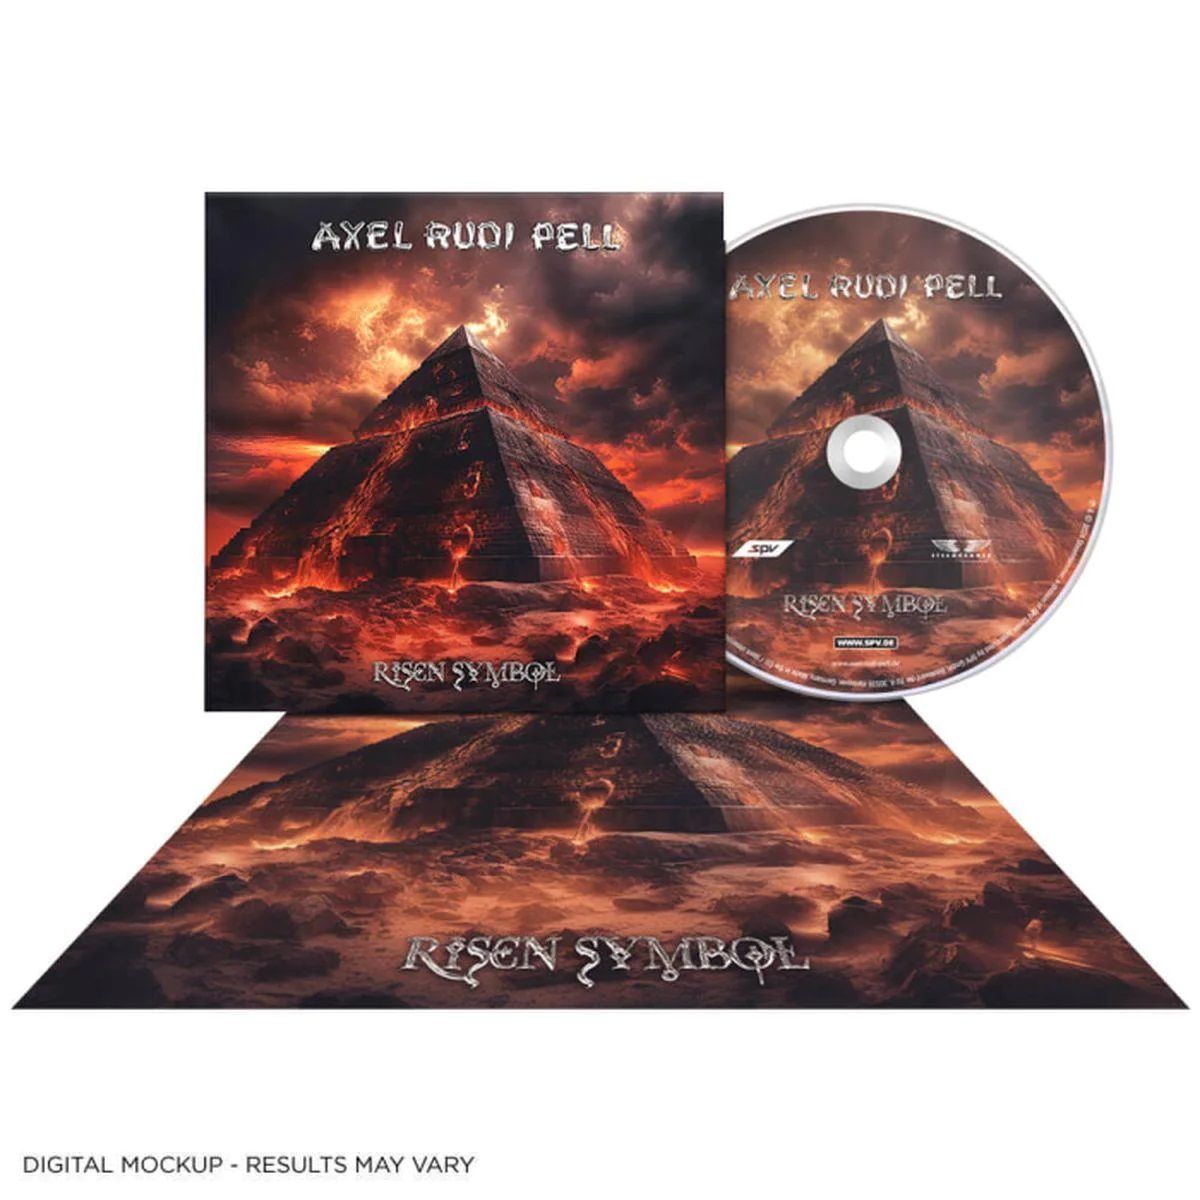 Pell, Axel Rudi - Risen Symbol (Special Ed.) - CD - New - PRE-ORDER